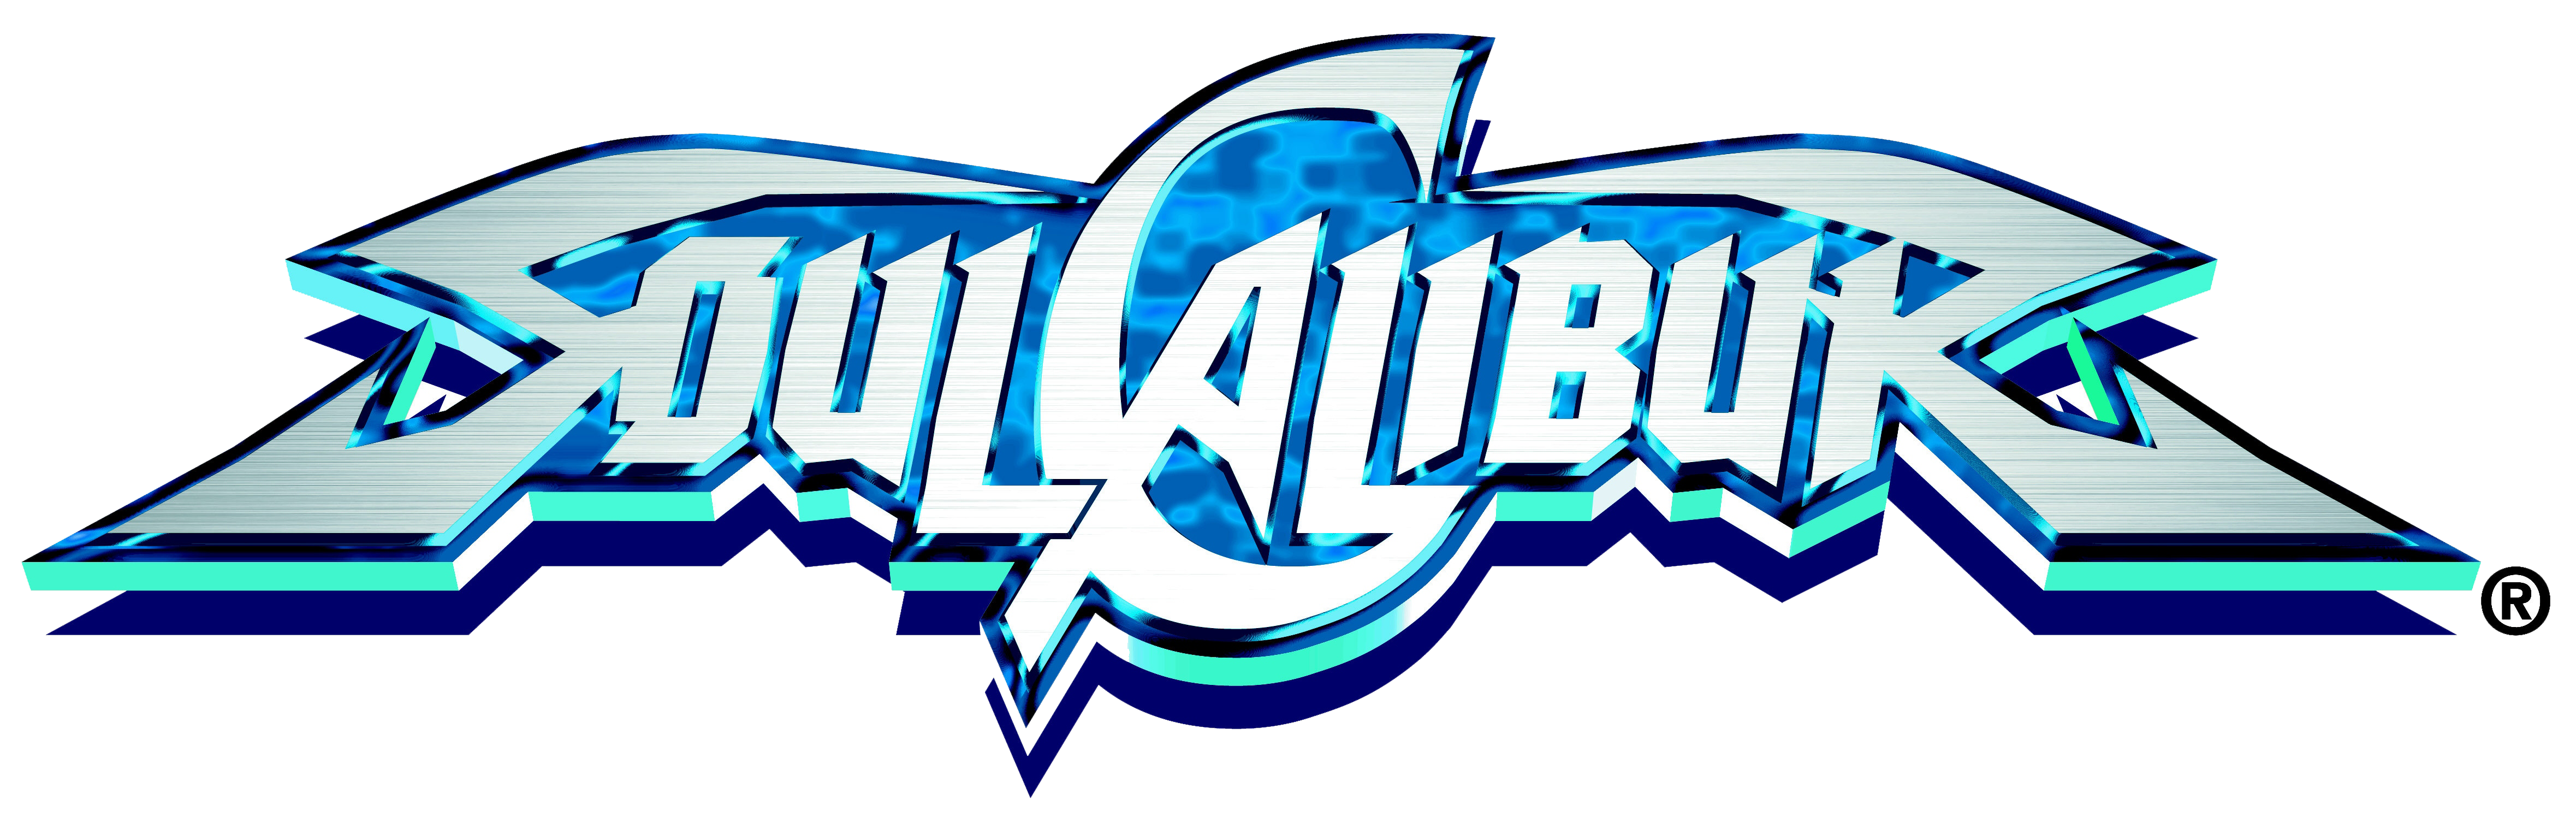 Soulcalibur Logo PNG HD Quality